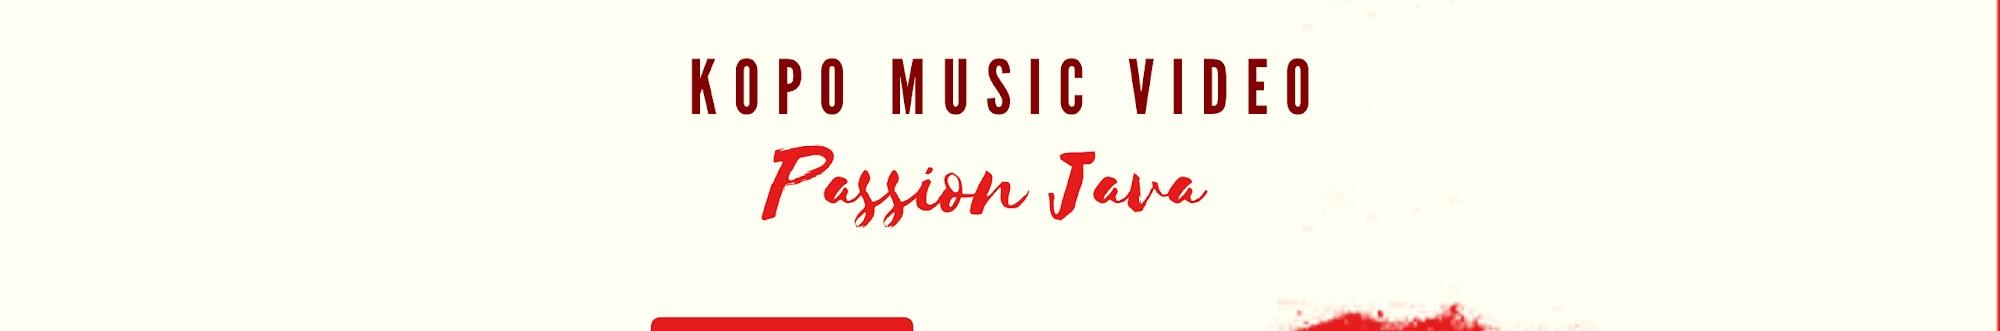 Passion Java Records